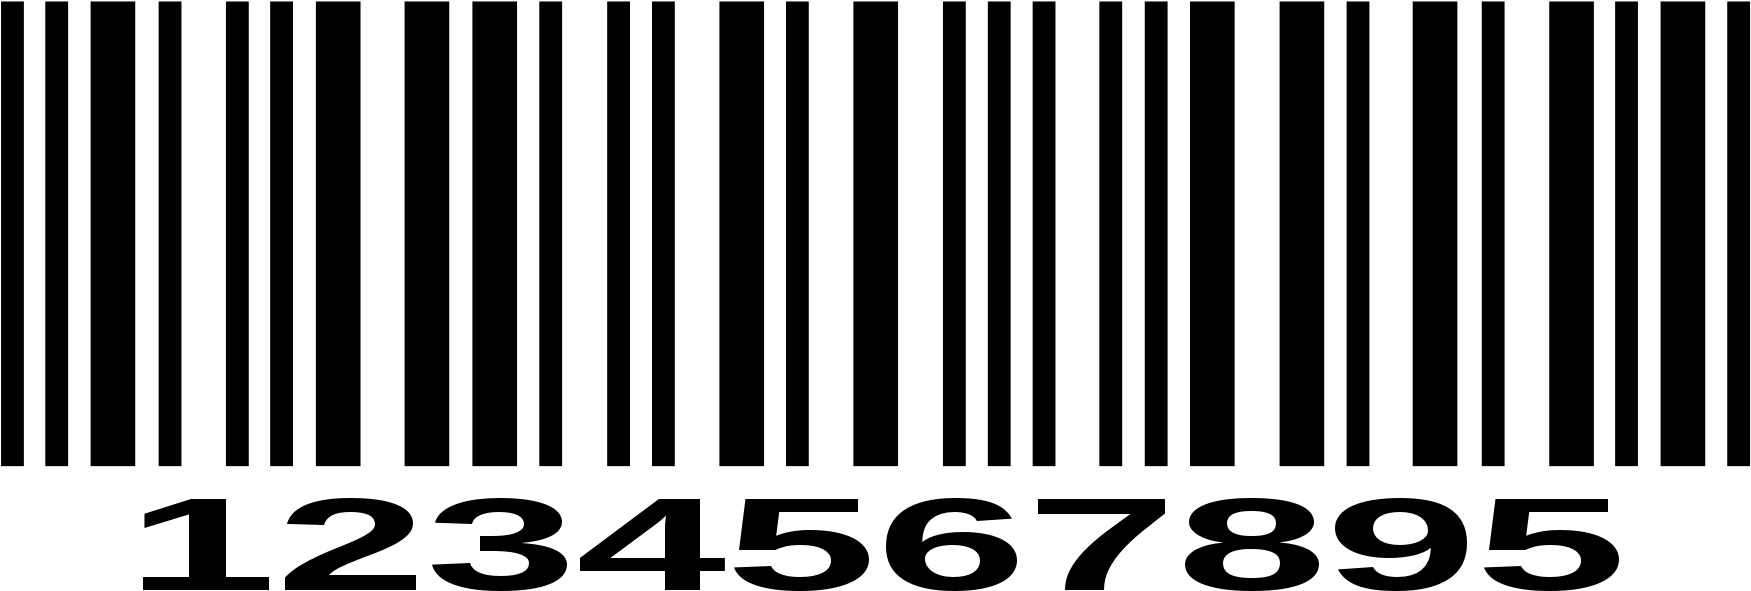 barcode maker free online